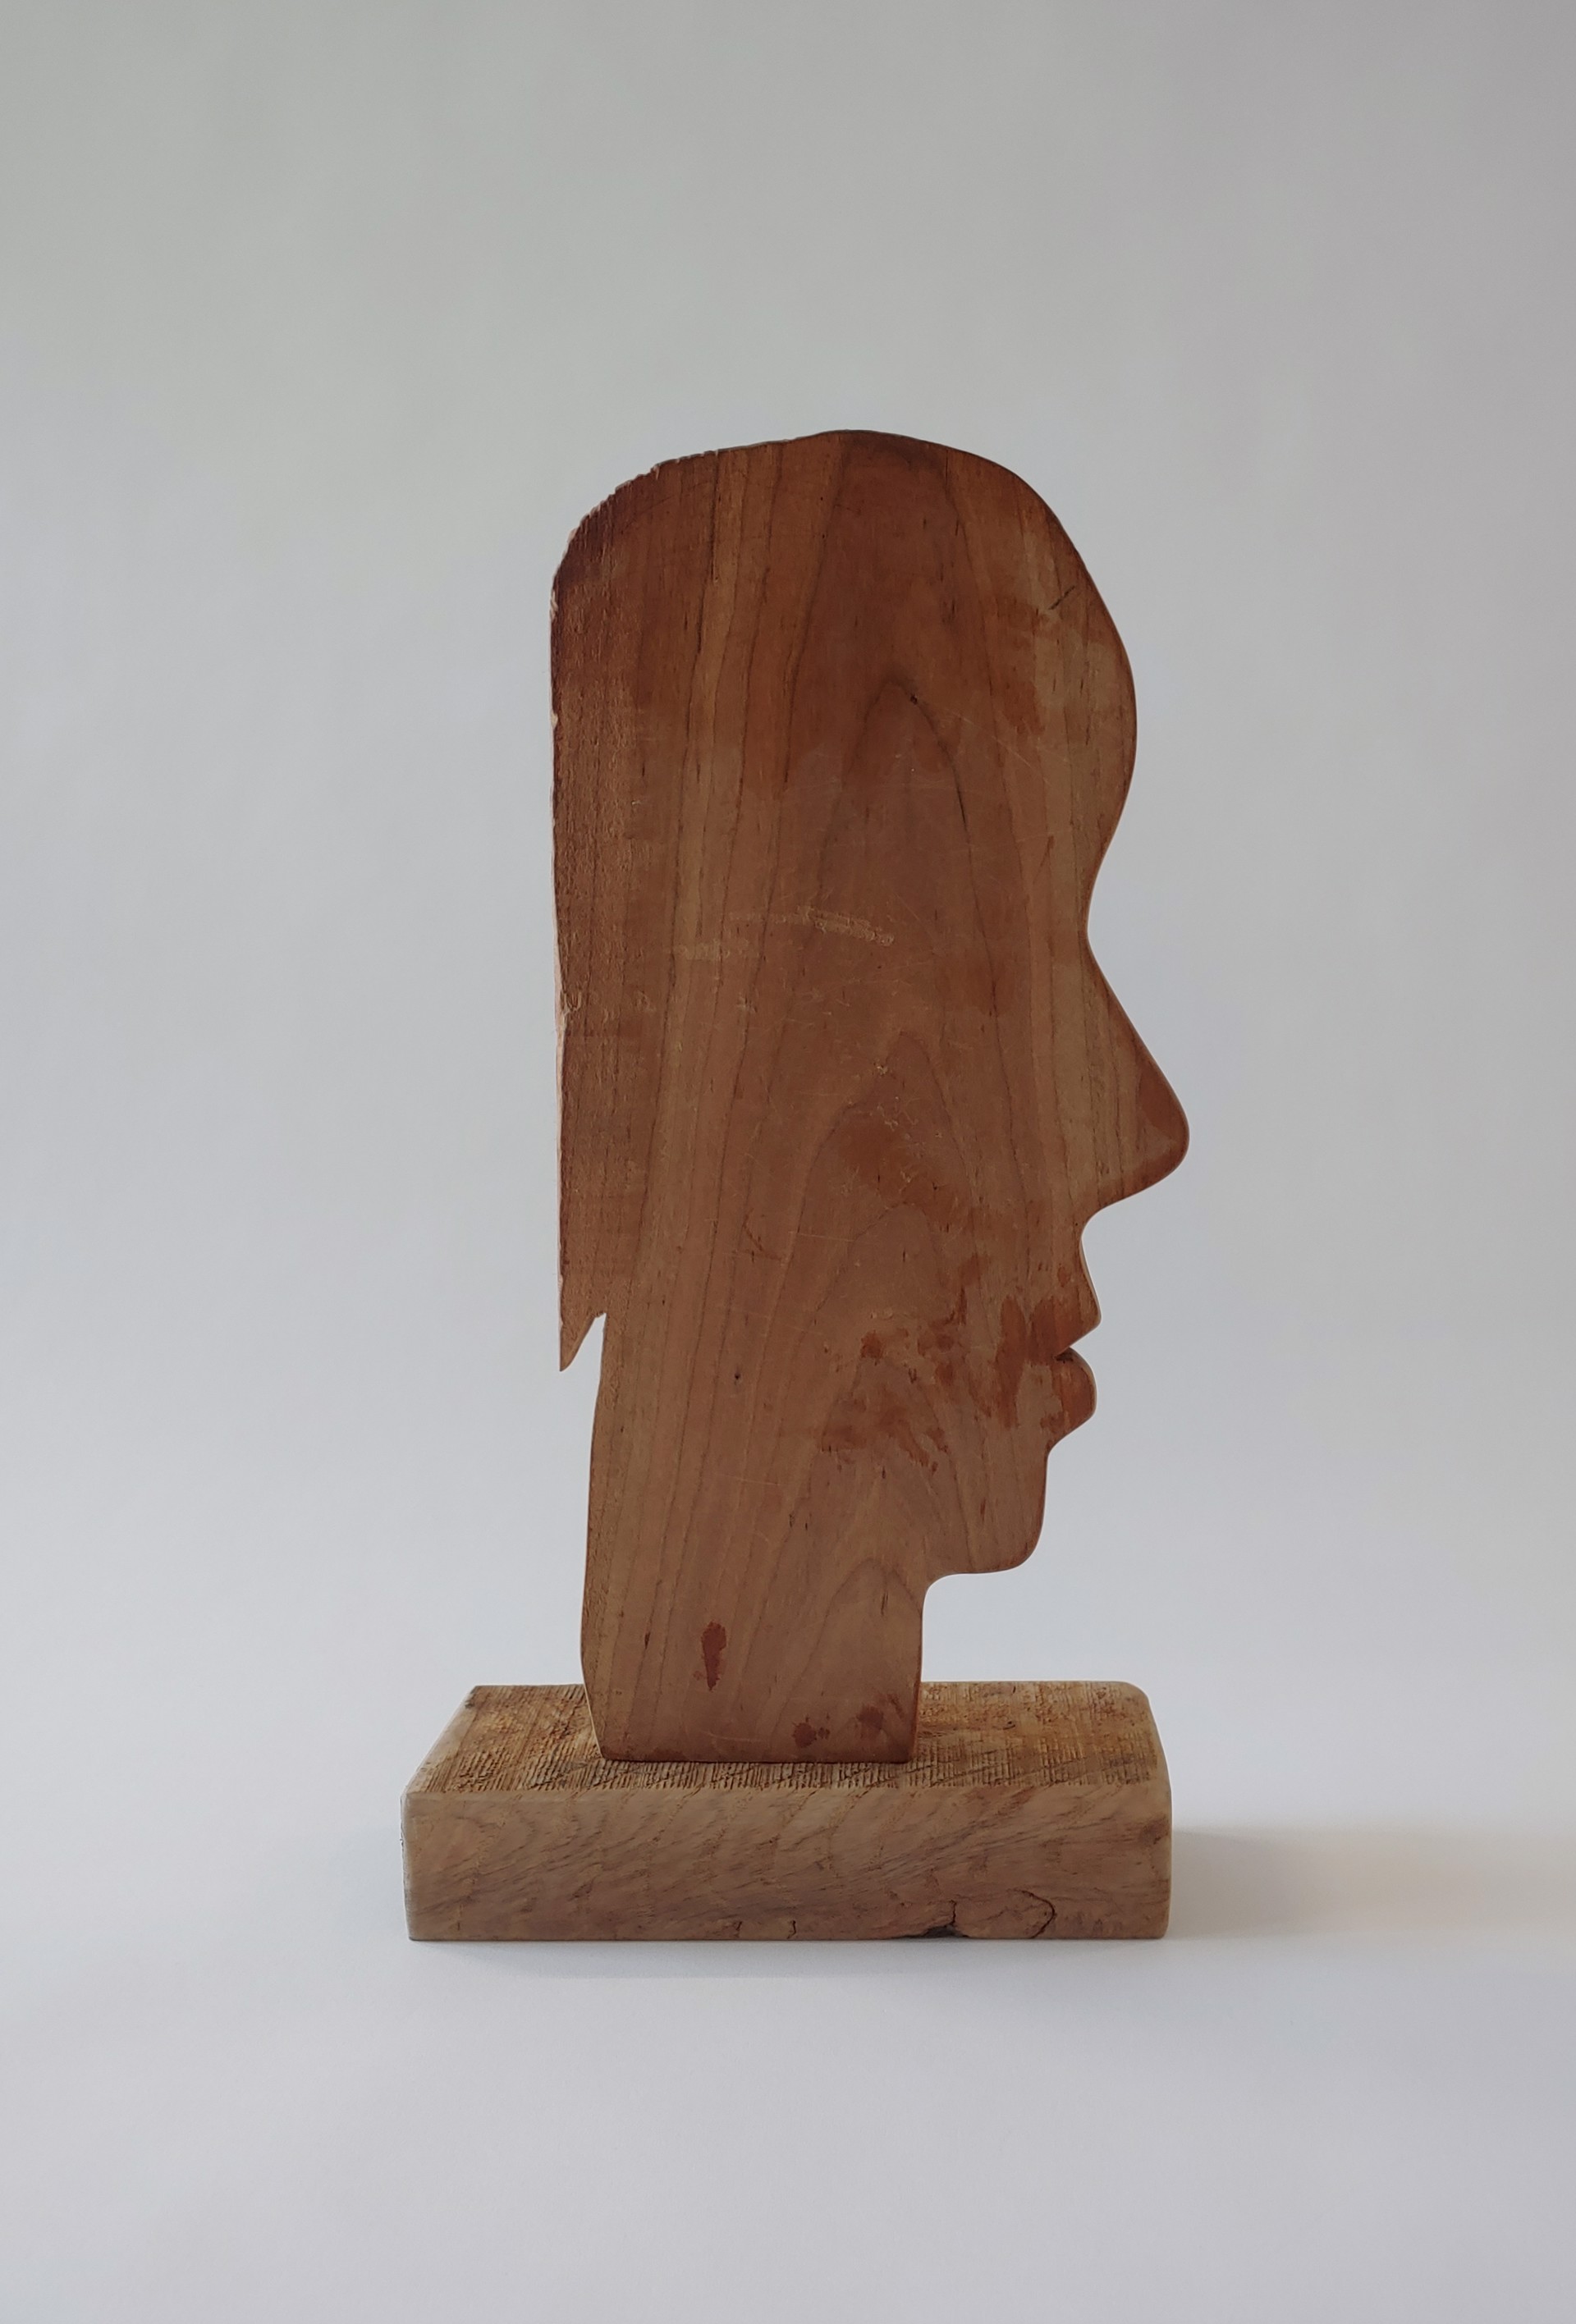 Man's Profile - Wood Sculpture by David Amdur